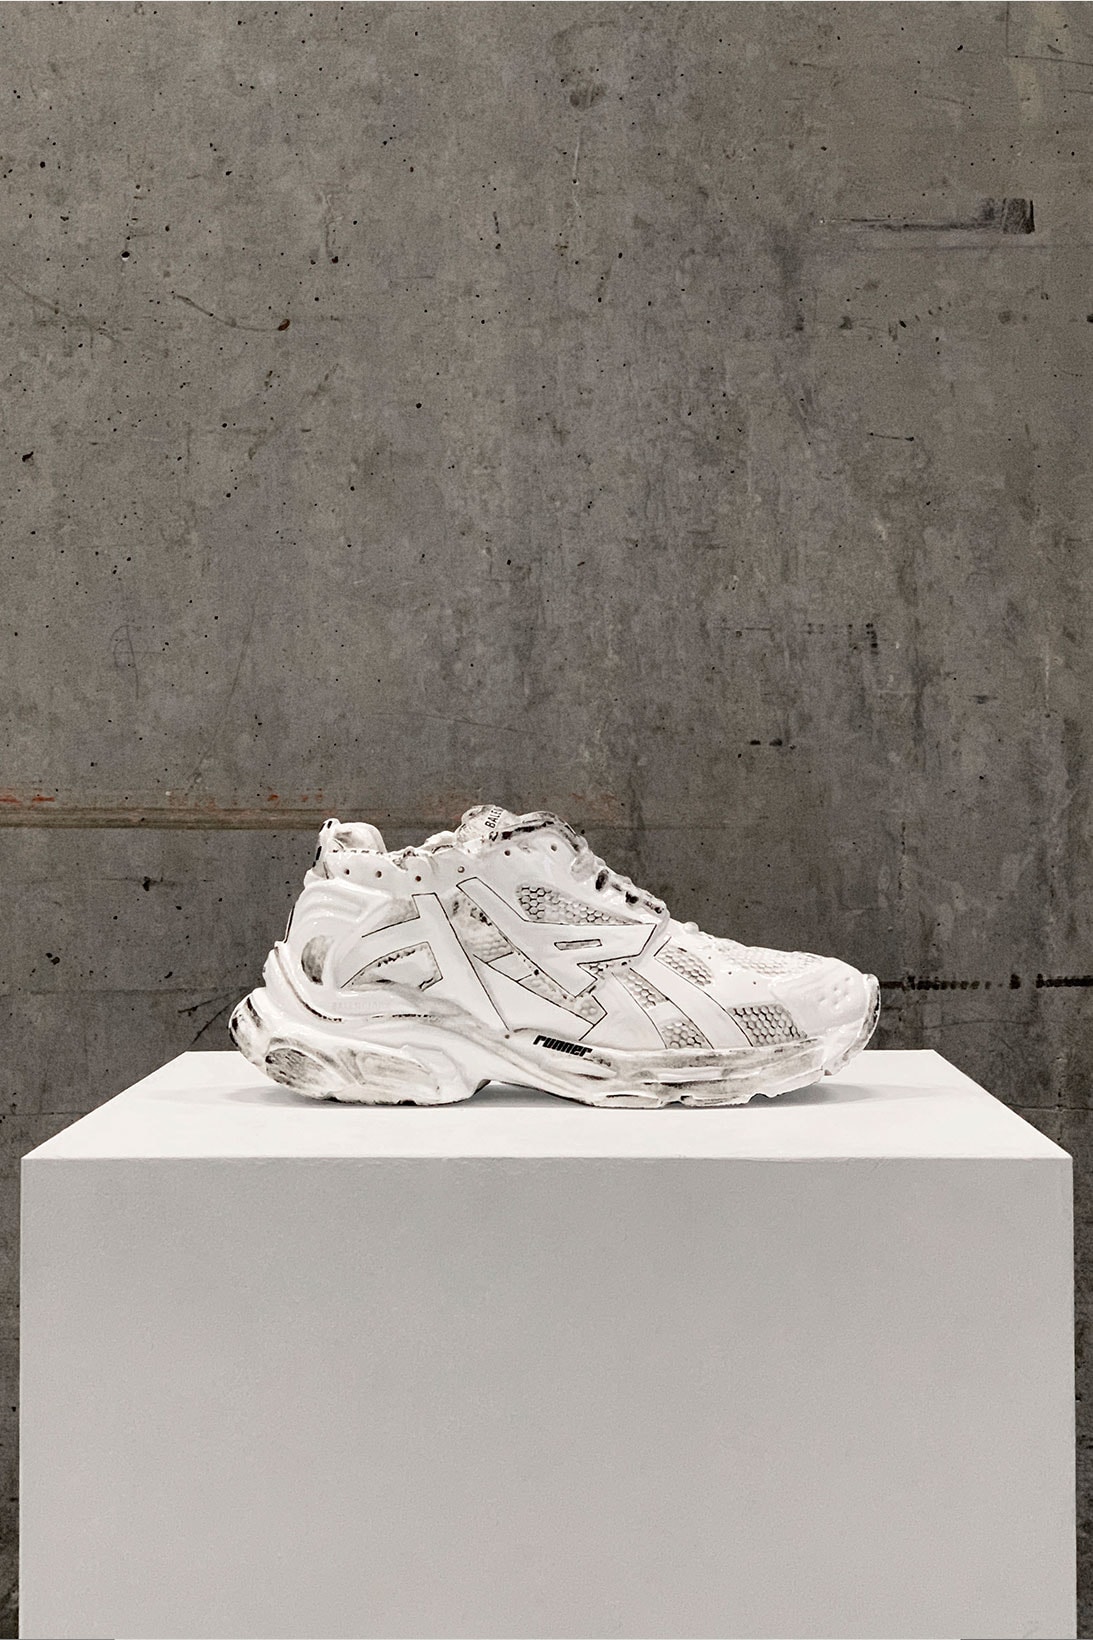 Balenciaga Objects Runner Sculpture Sneaker Demna Gvasalia Release Price